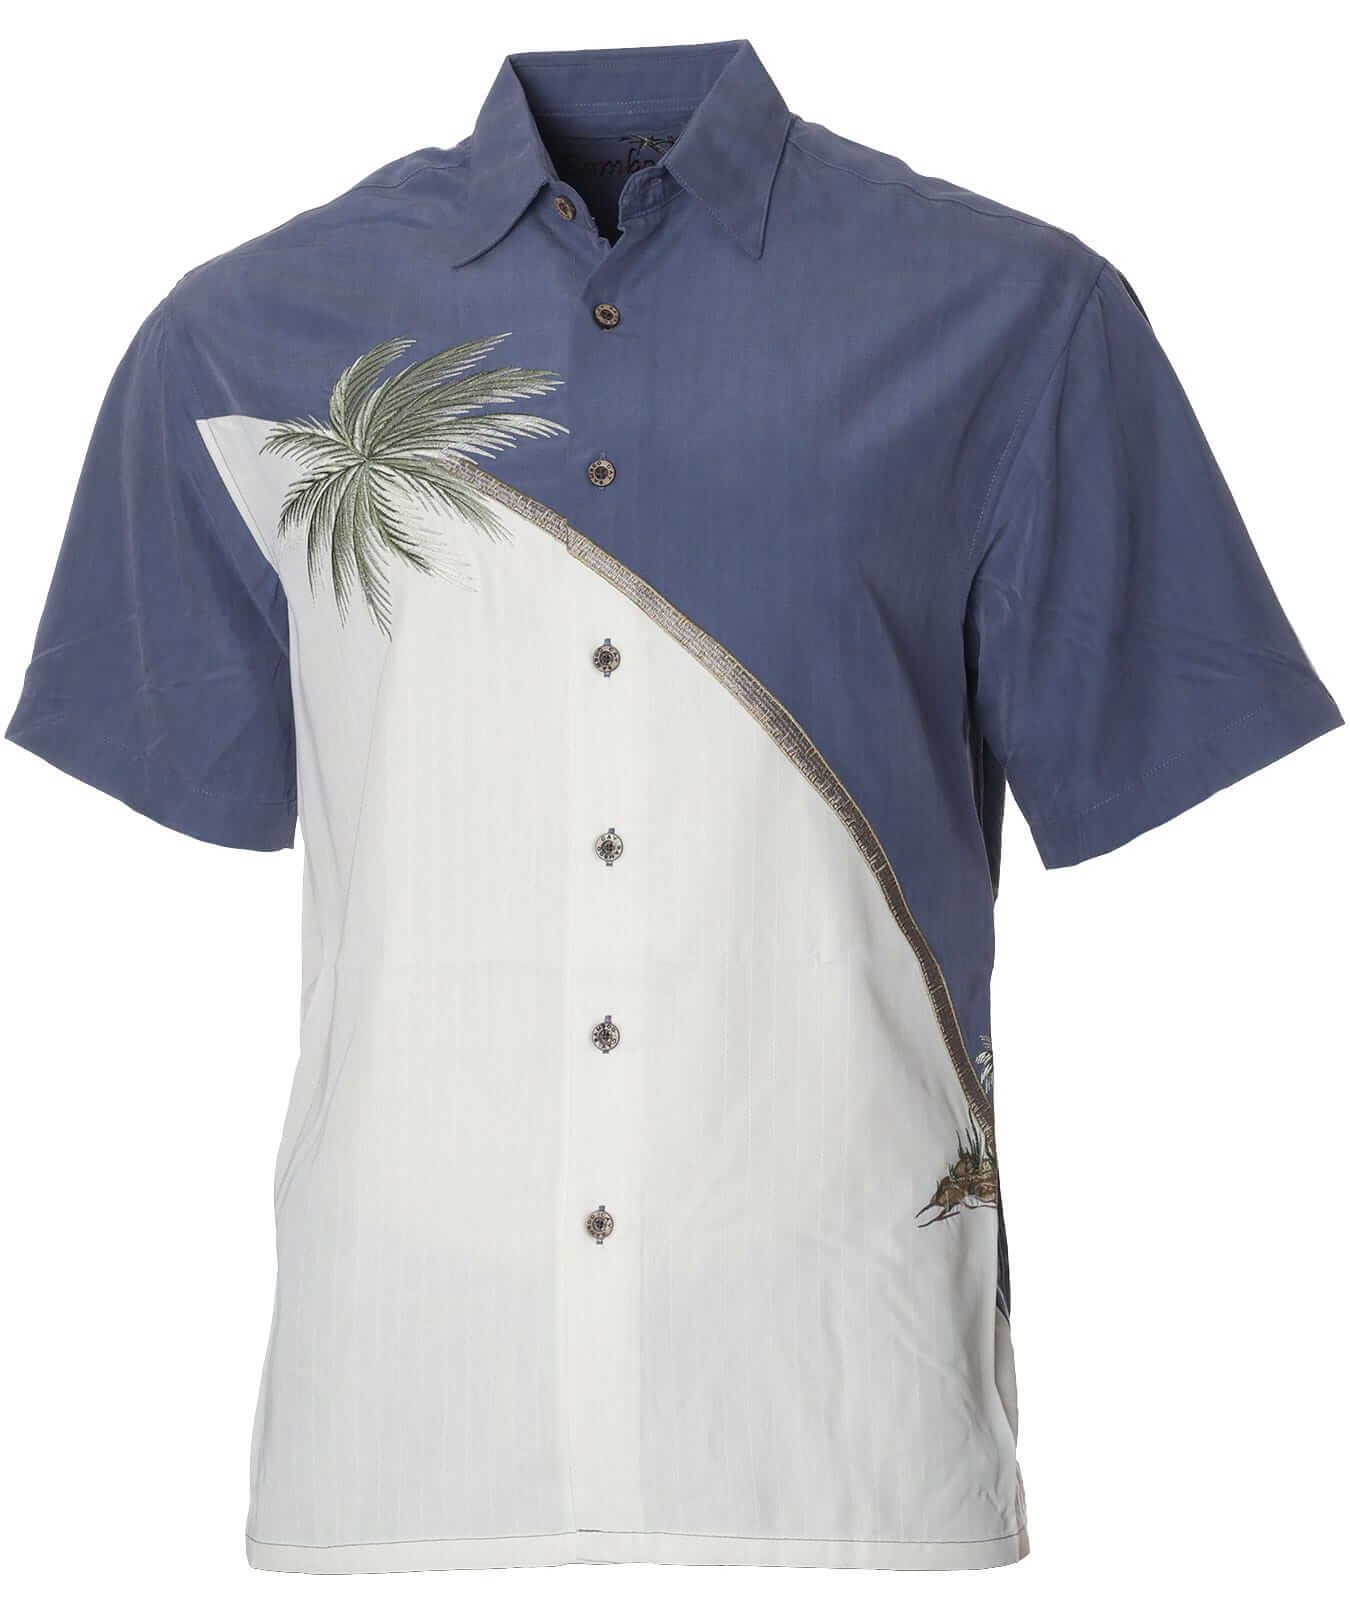 Elegant Palms Bamboo Cay Modal Men's Shirt Navy